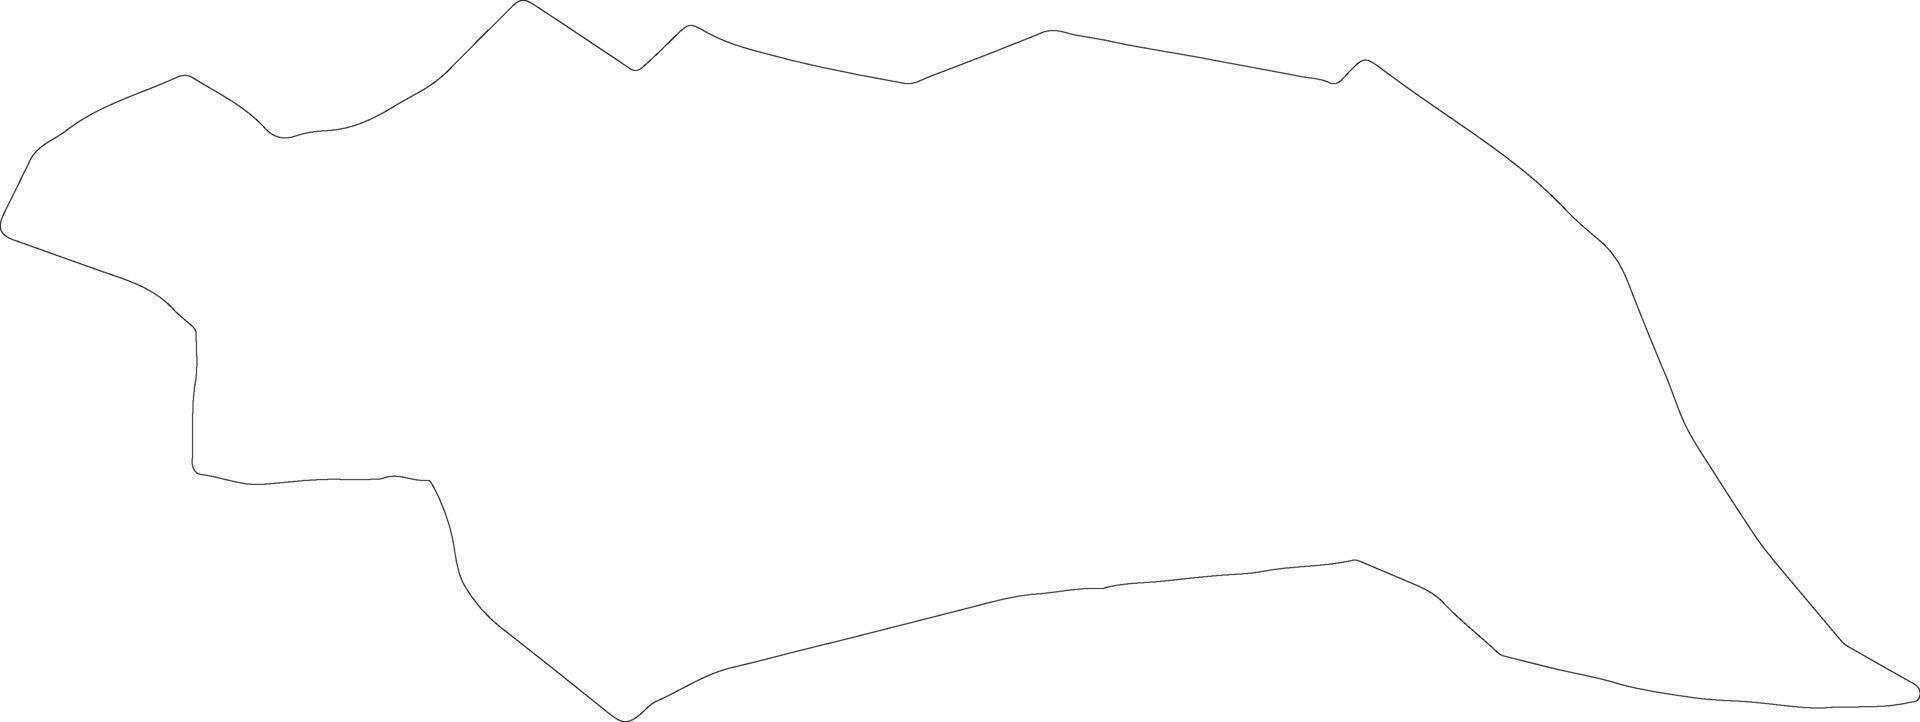 famagusta Cyprus schets kaart vector